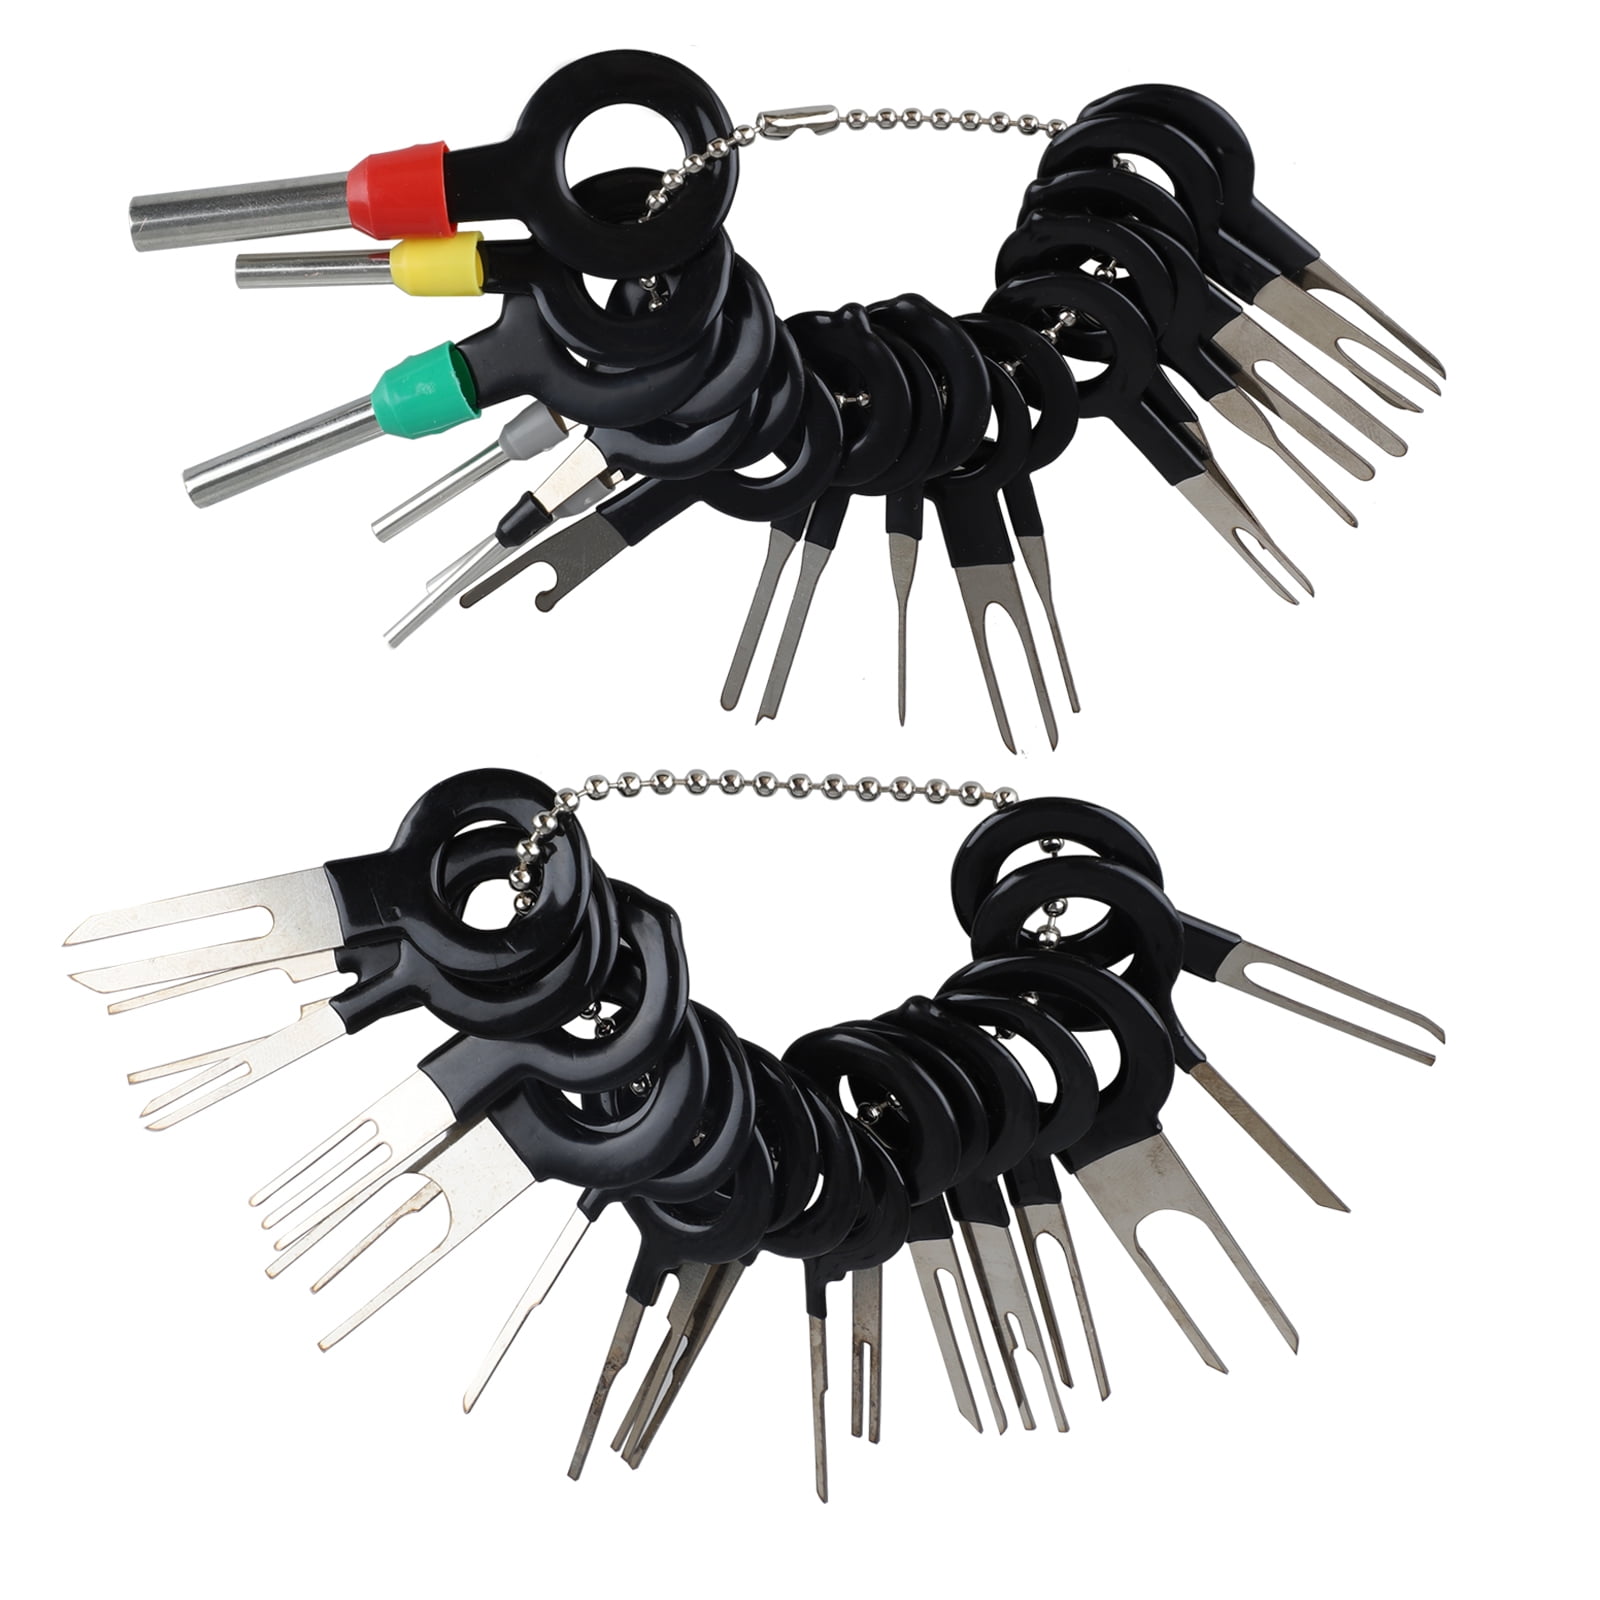 Cuque 5pcs Car Cable Wire Terminal Plug Pin Removal Dismount Tool Kit Automotive Wiring Harness Terminal Socket Maintenance Titanium Alloy Remove Kit 